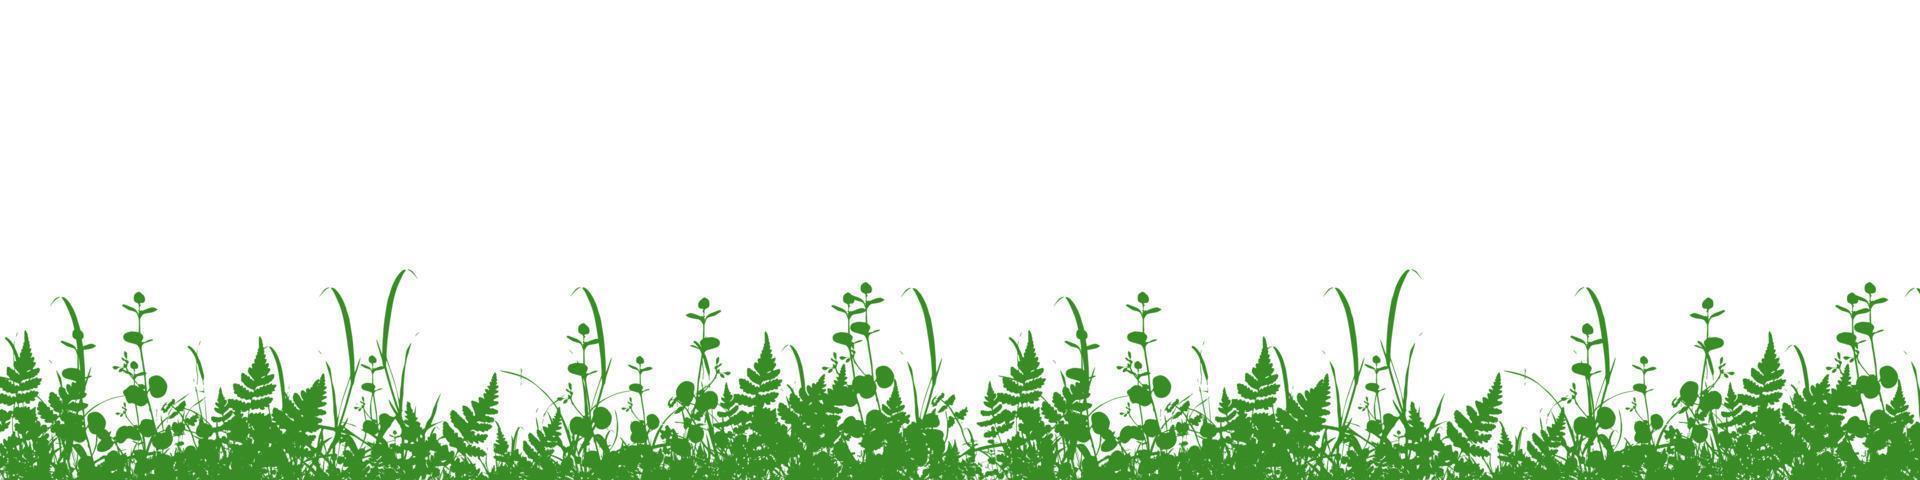 vetor silhueta de grama verde. fundo de repetição de grama. fundo de silhueta de grama verde. ilustração vetorial